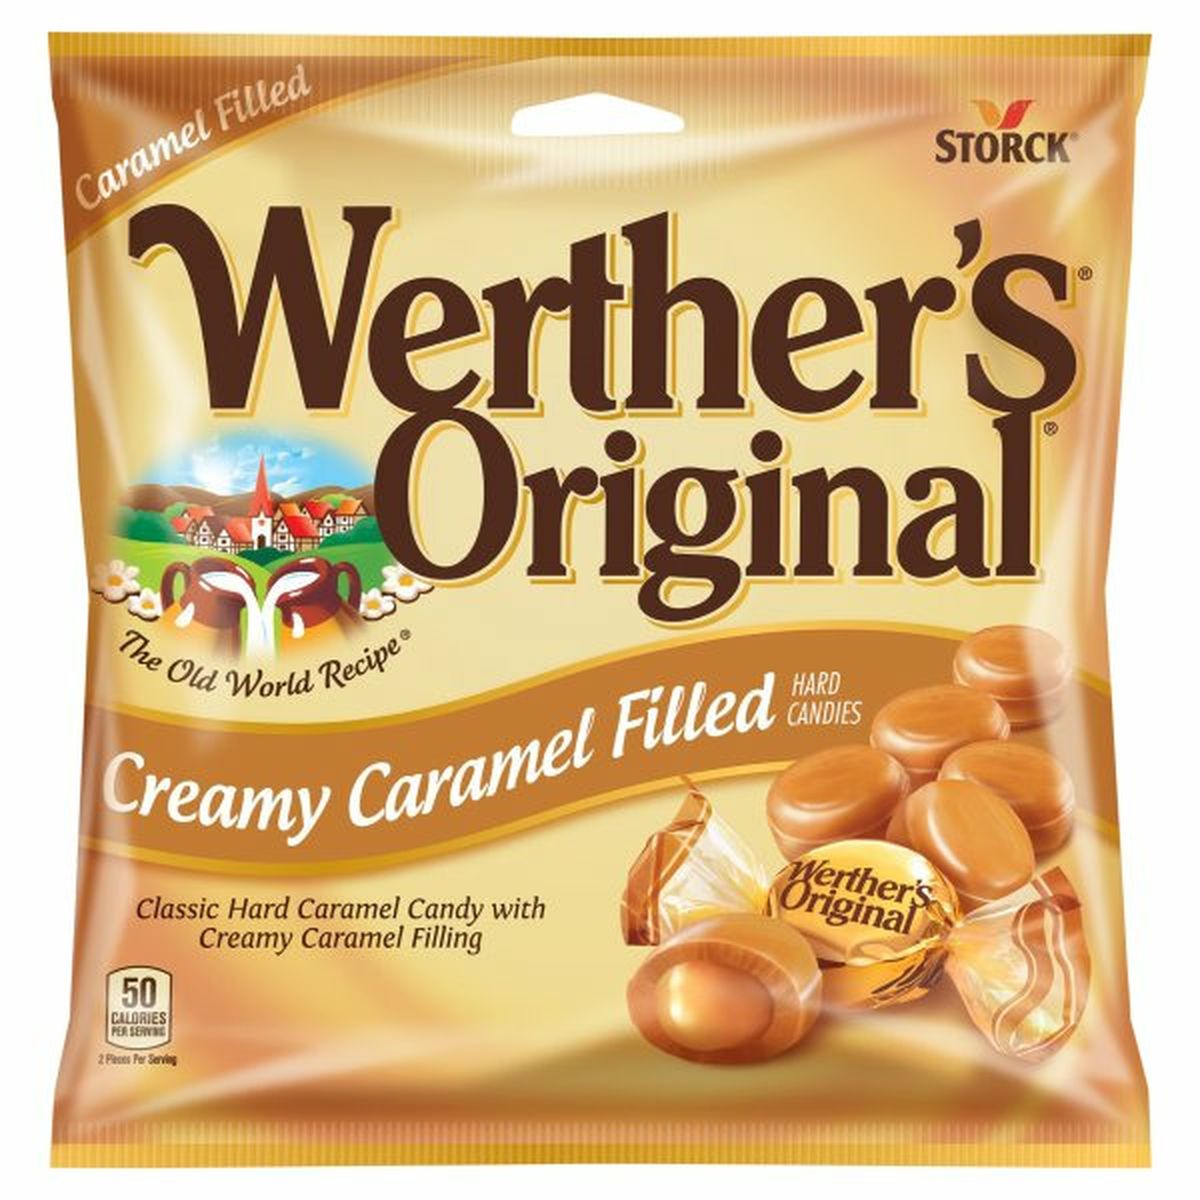 Calories in Werther's Original Original Hard Candies, Creamy Caramel Filled